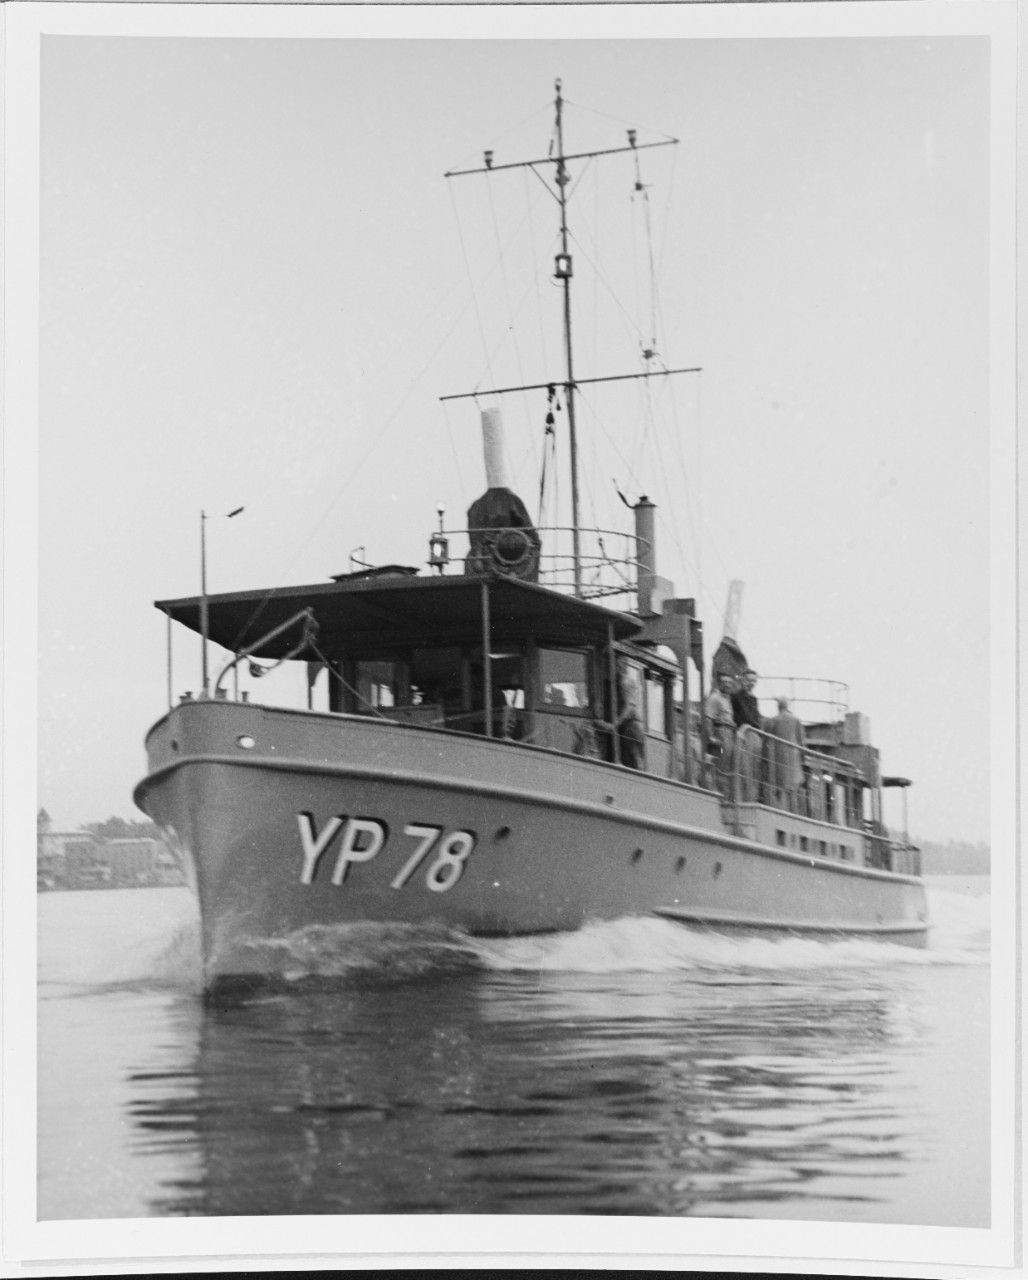 USS YP-78